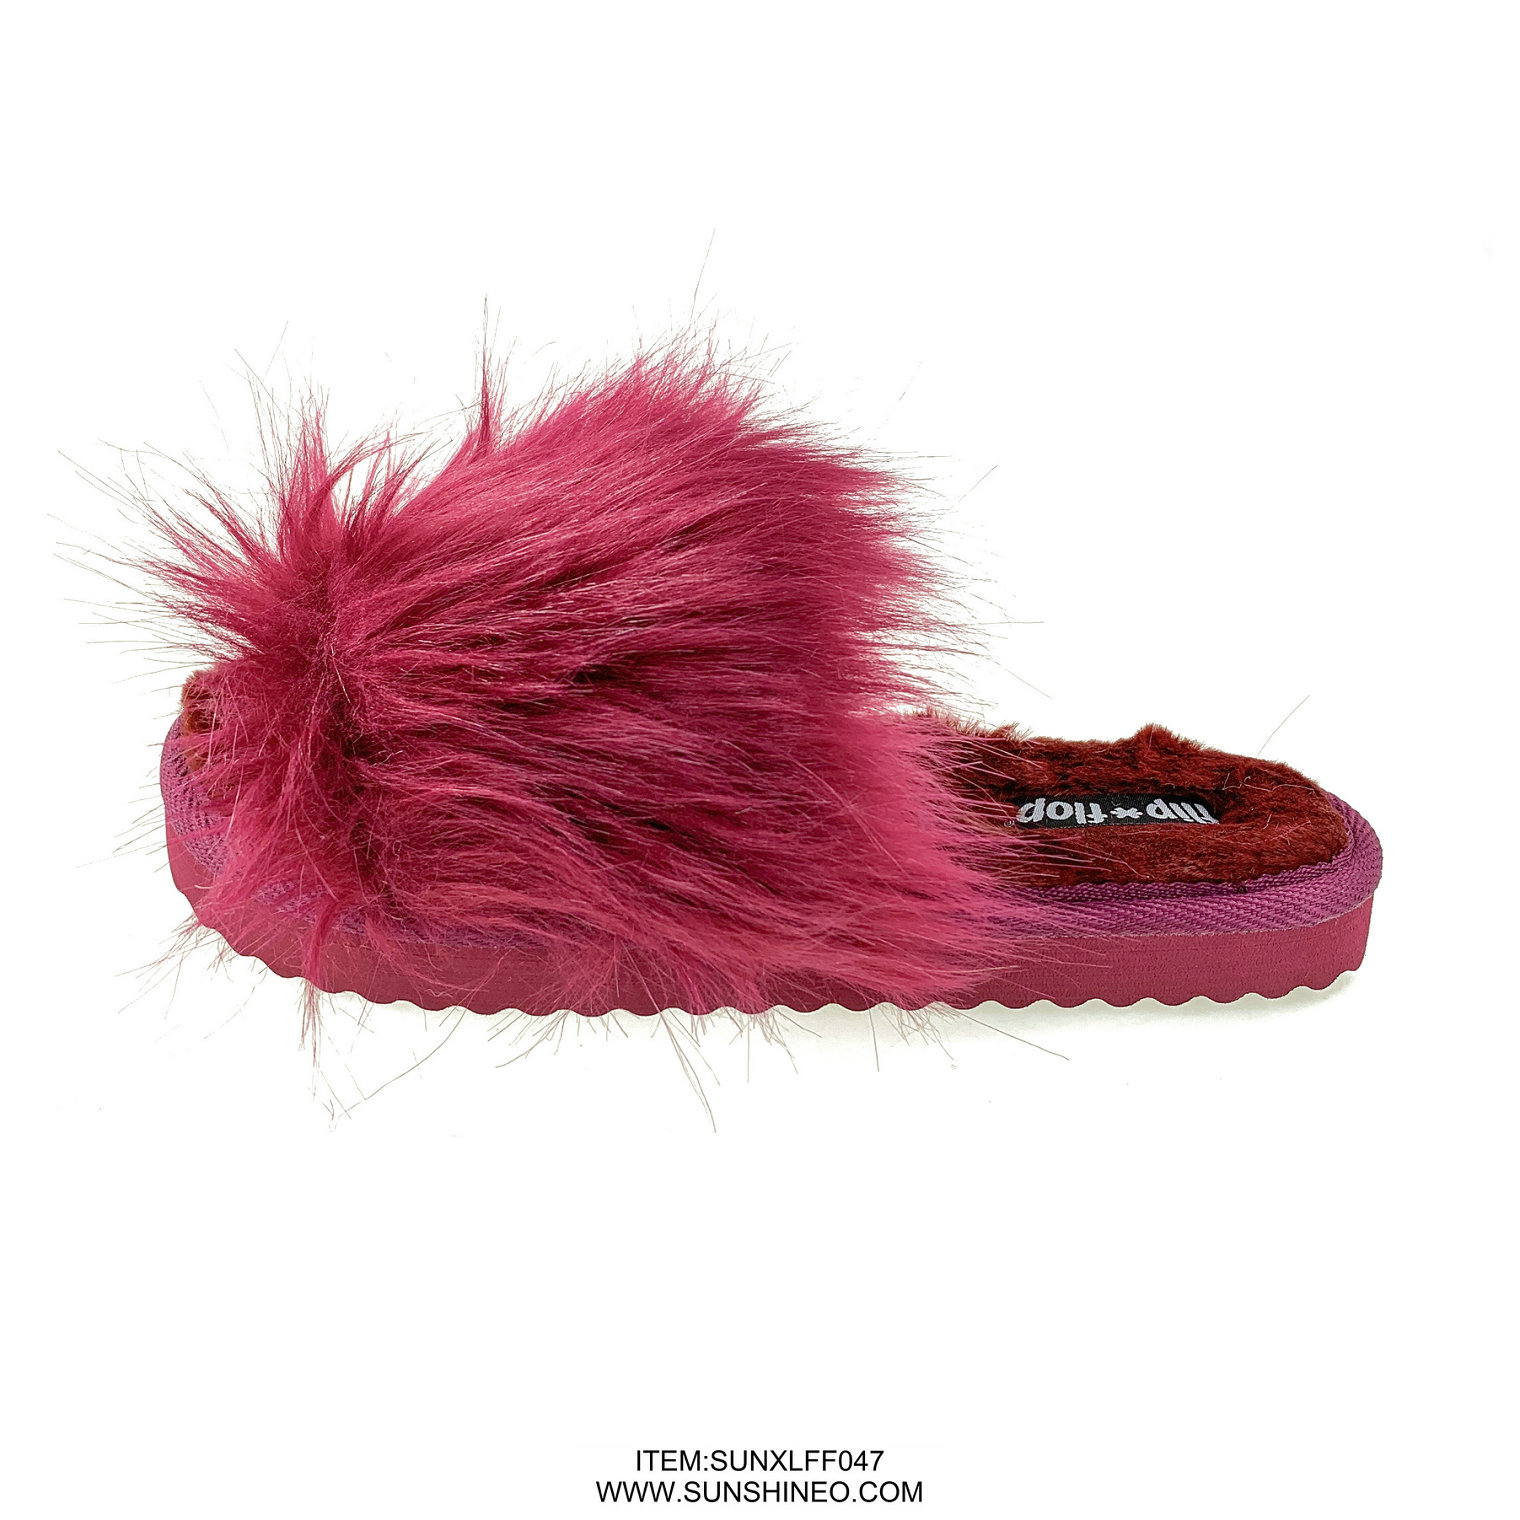 SUNXLFF047 fur flip flop sandals winter slippers